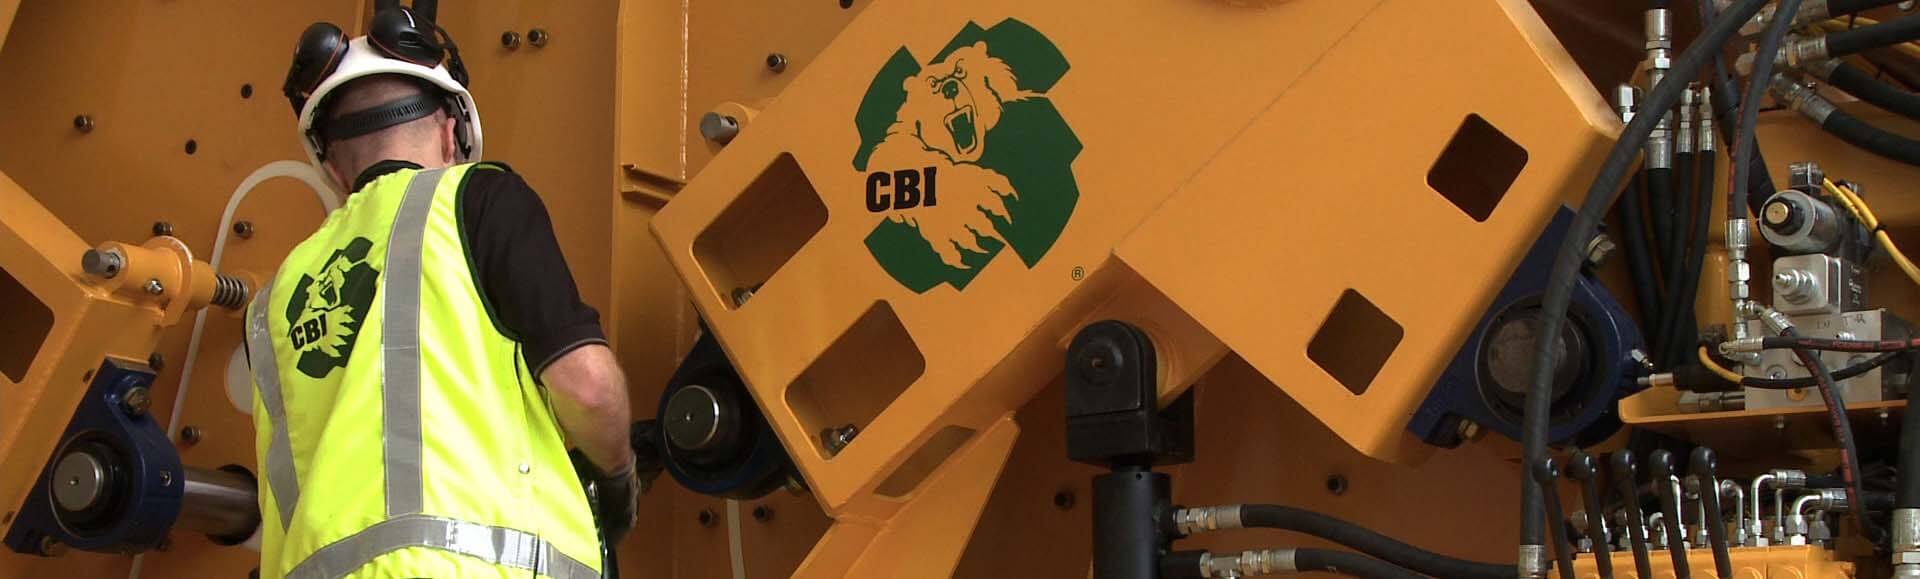 Preventative maintenance for your CBI grinder